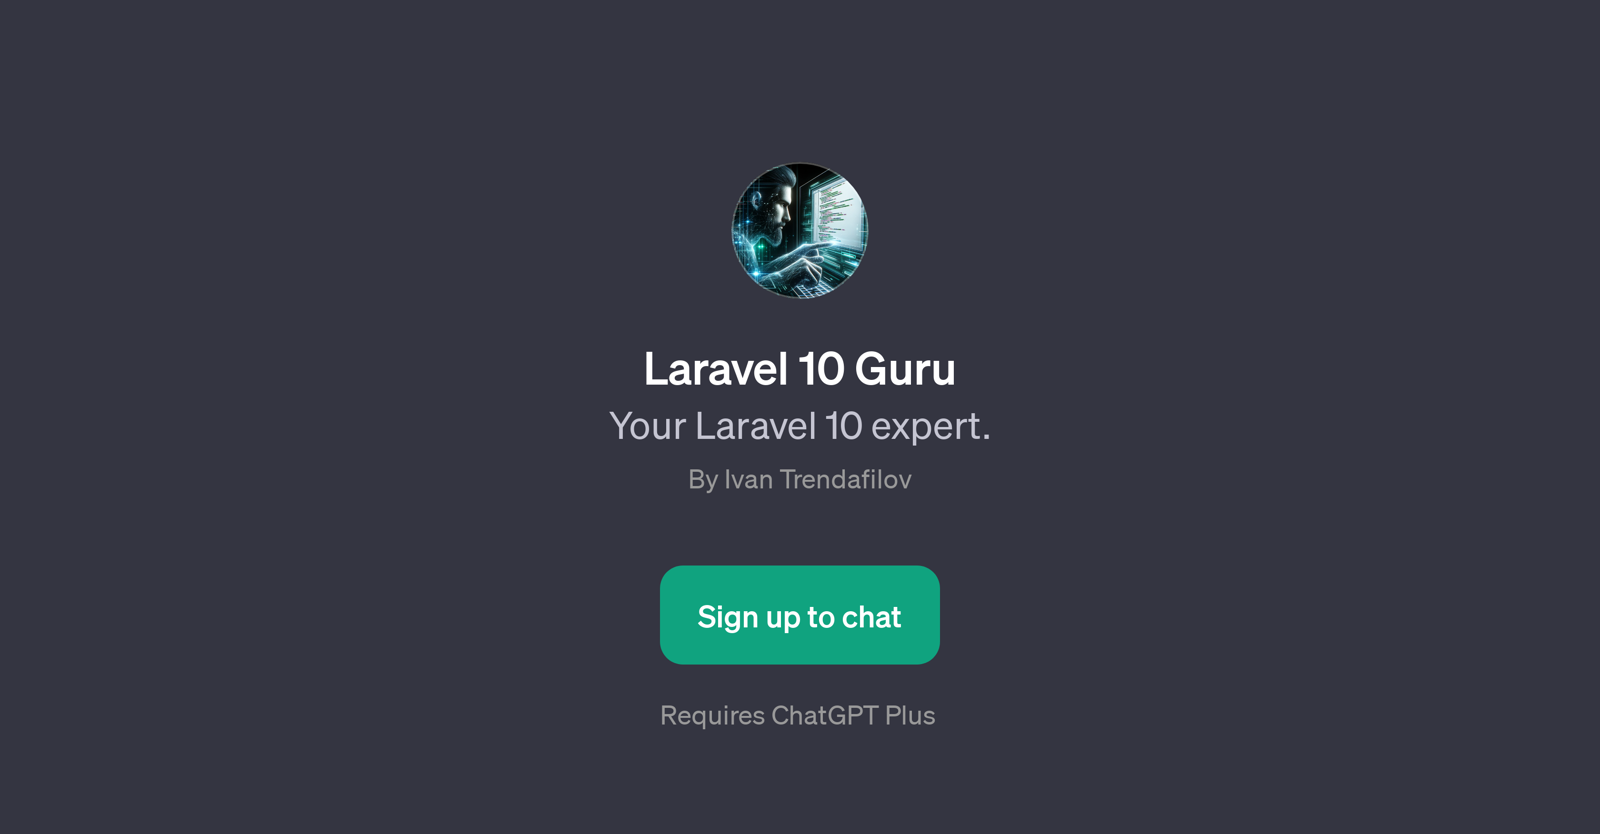 Laravel 10 Guru website